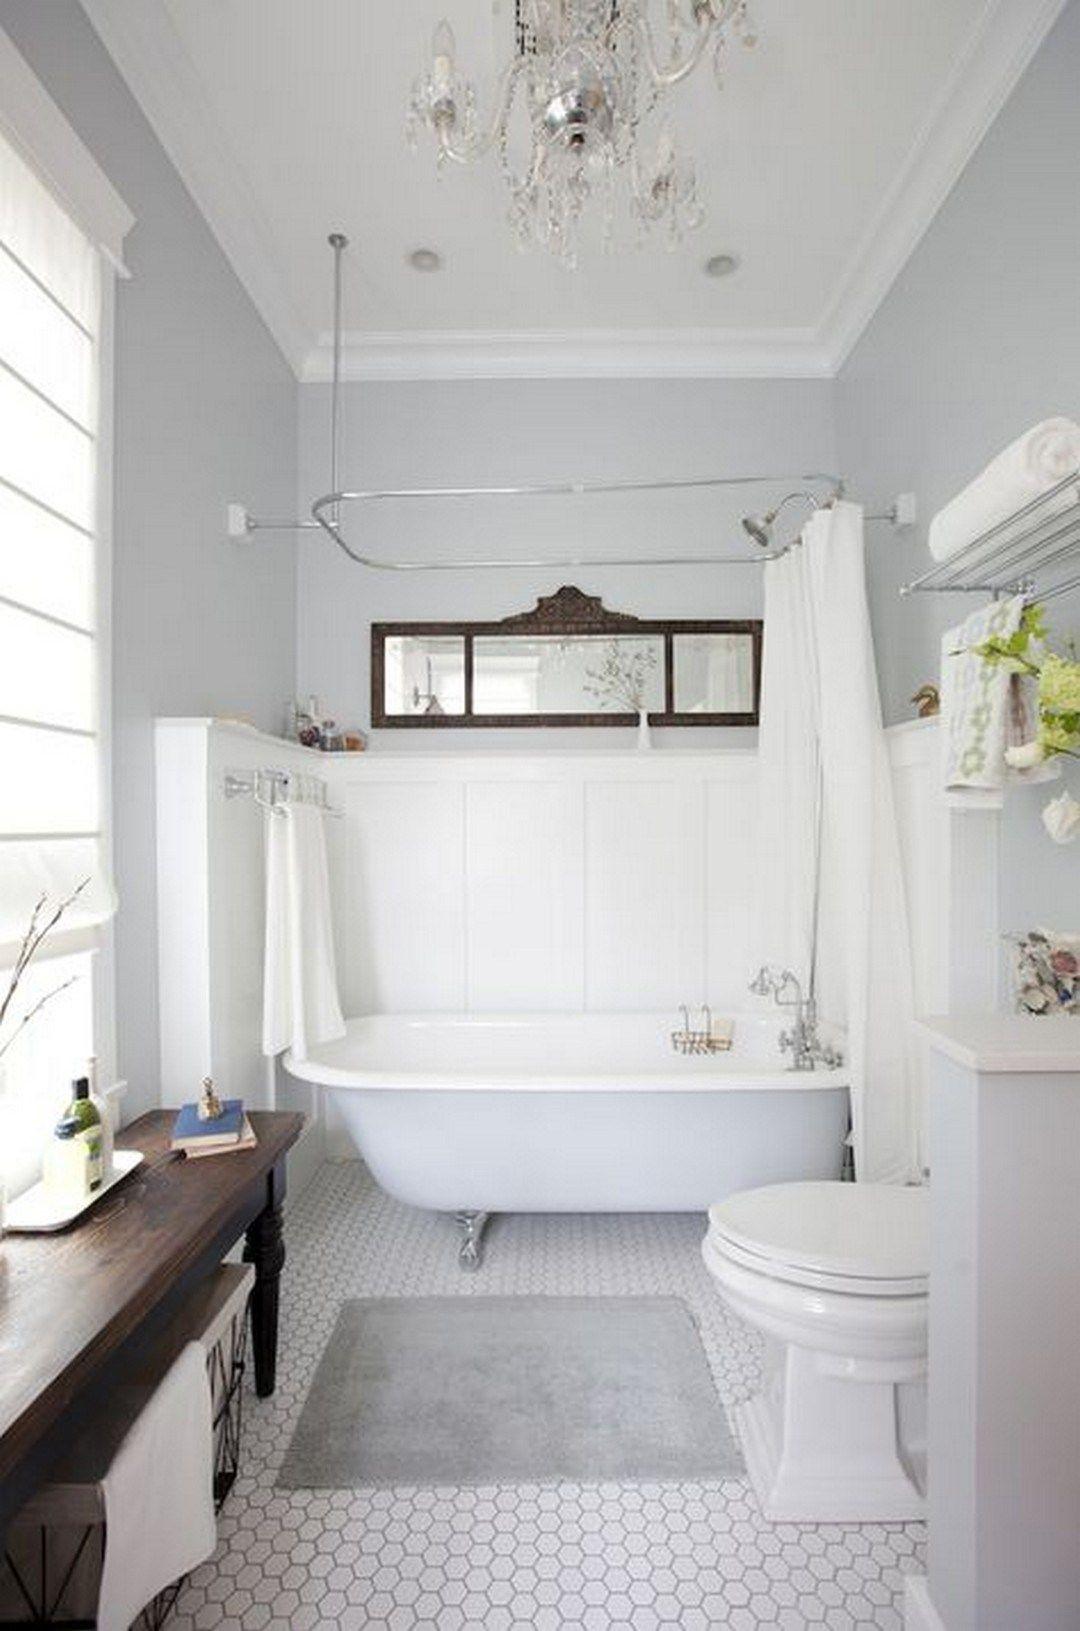 Small Master Bathroom Layout
 100 Small Master Bathroom Design Ideas decoratoo